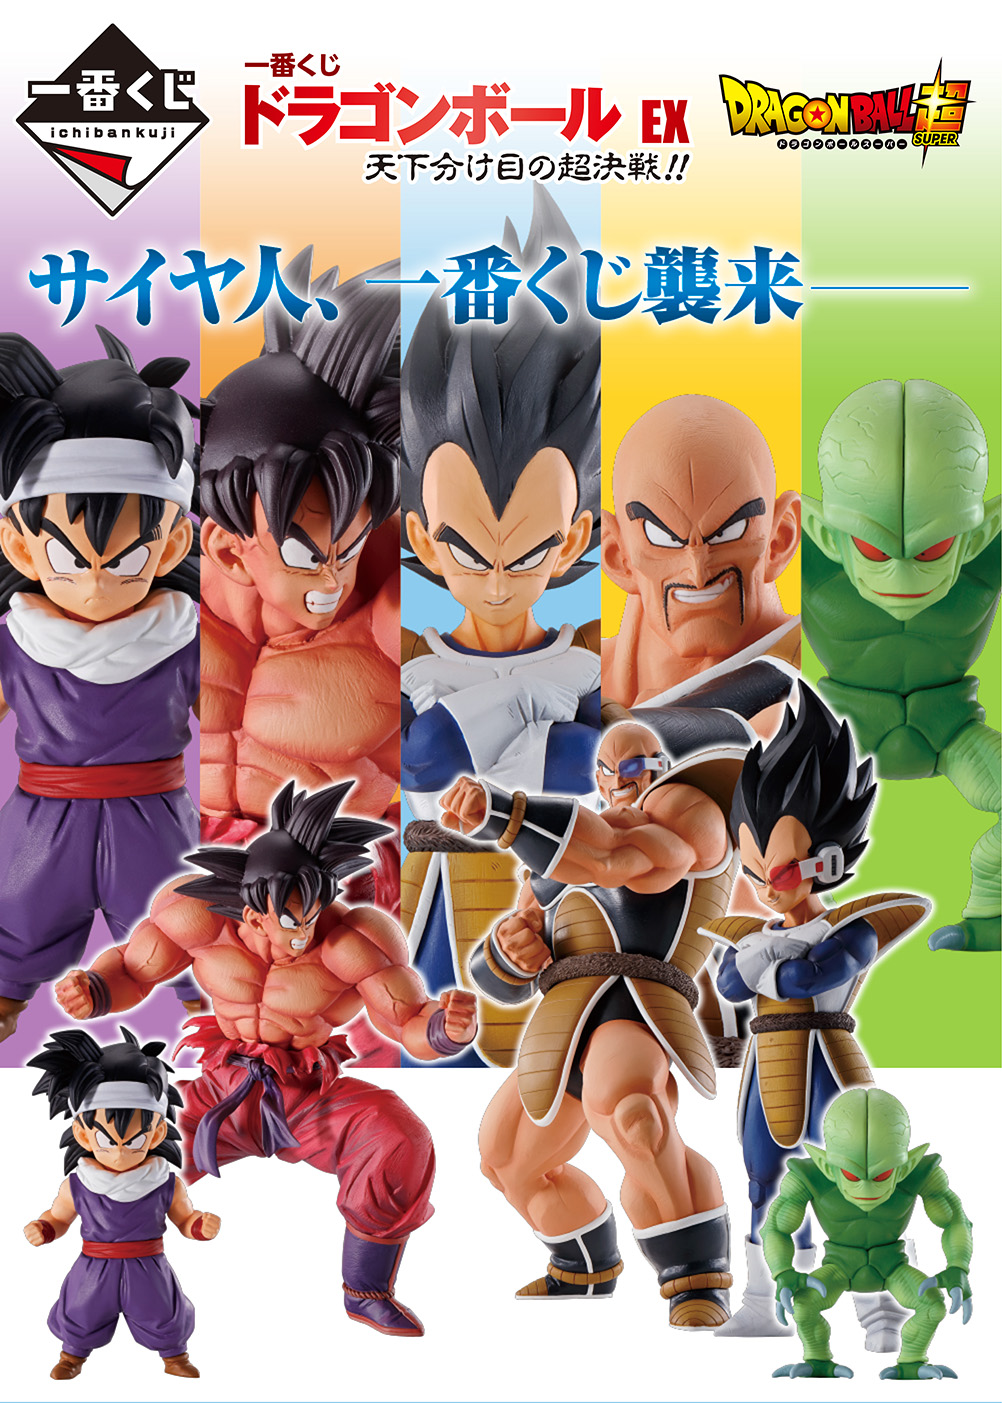 Ichiban Kuji Dragon Ball Ex World Divide Super Battle Bandai My Anime Figure